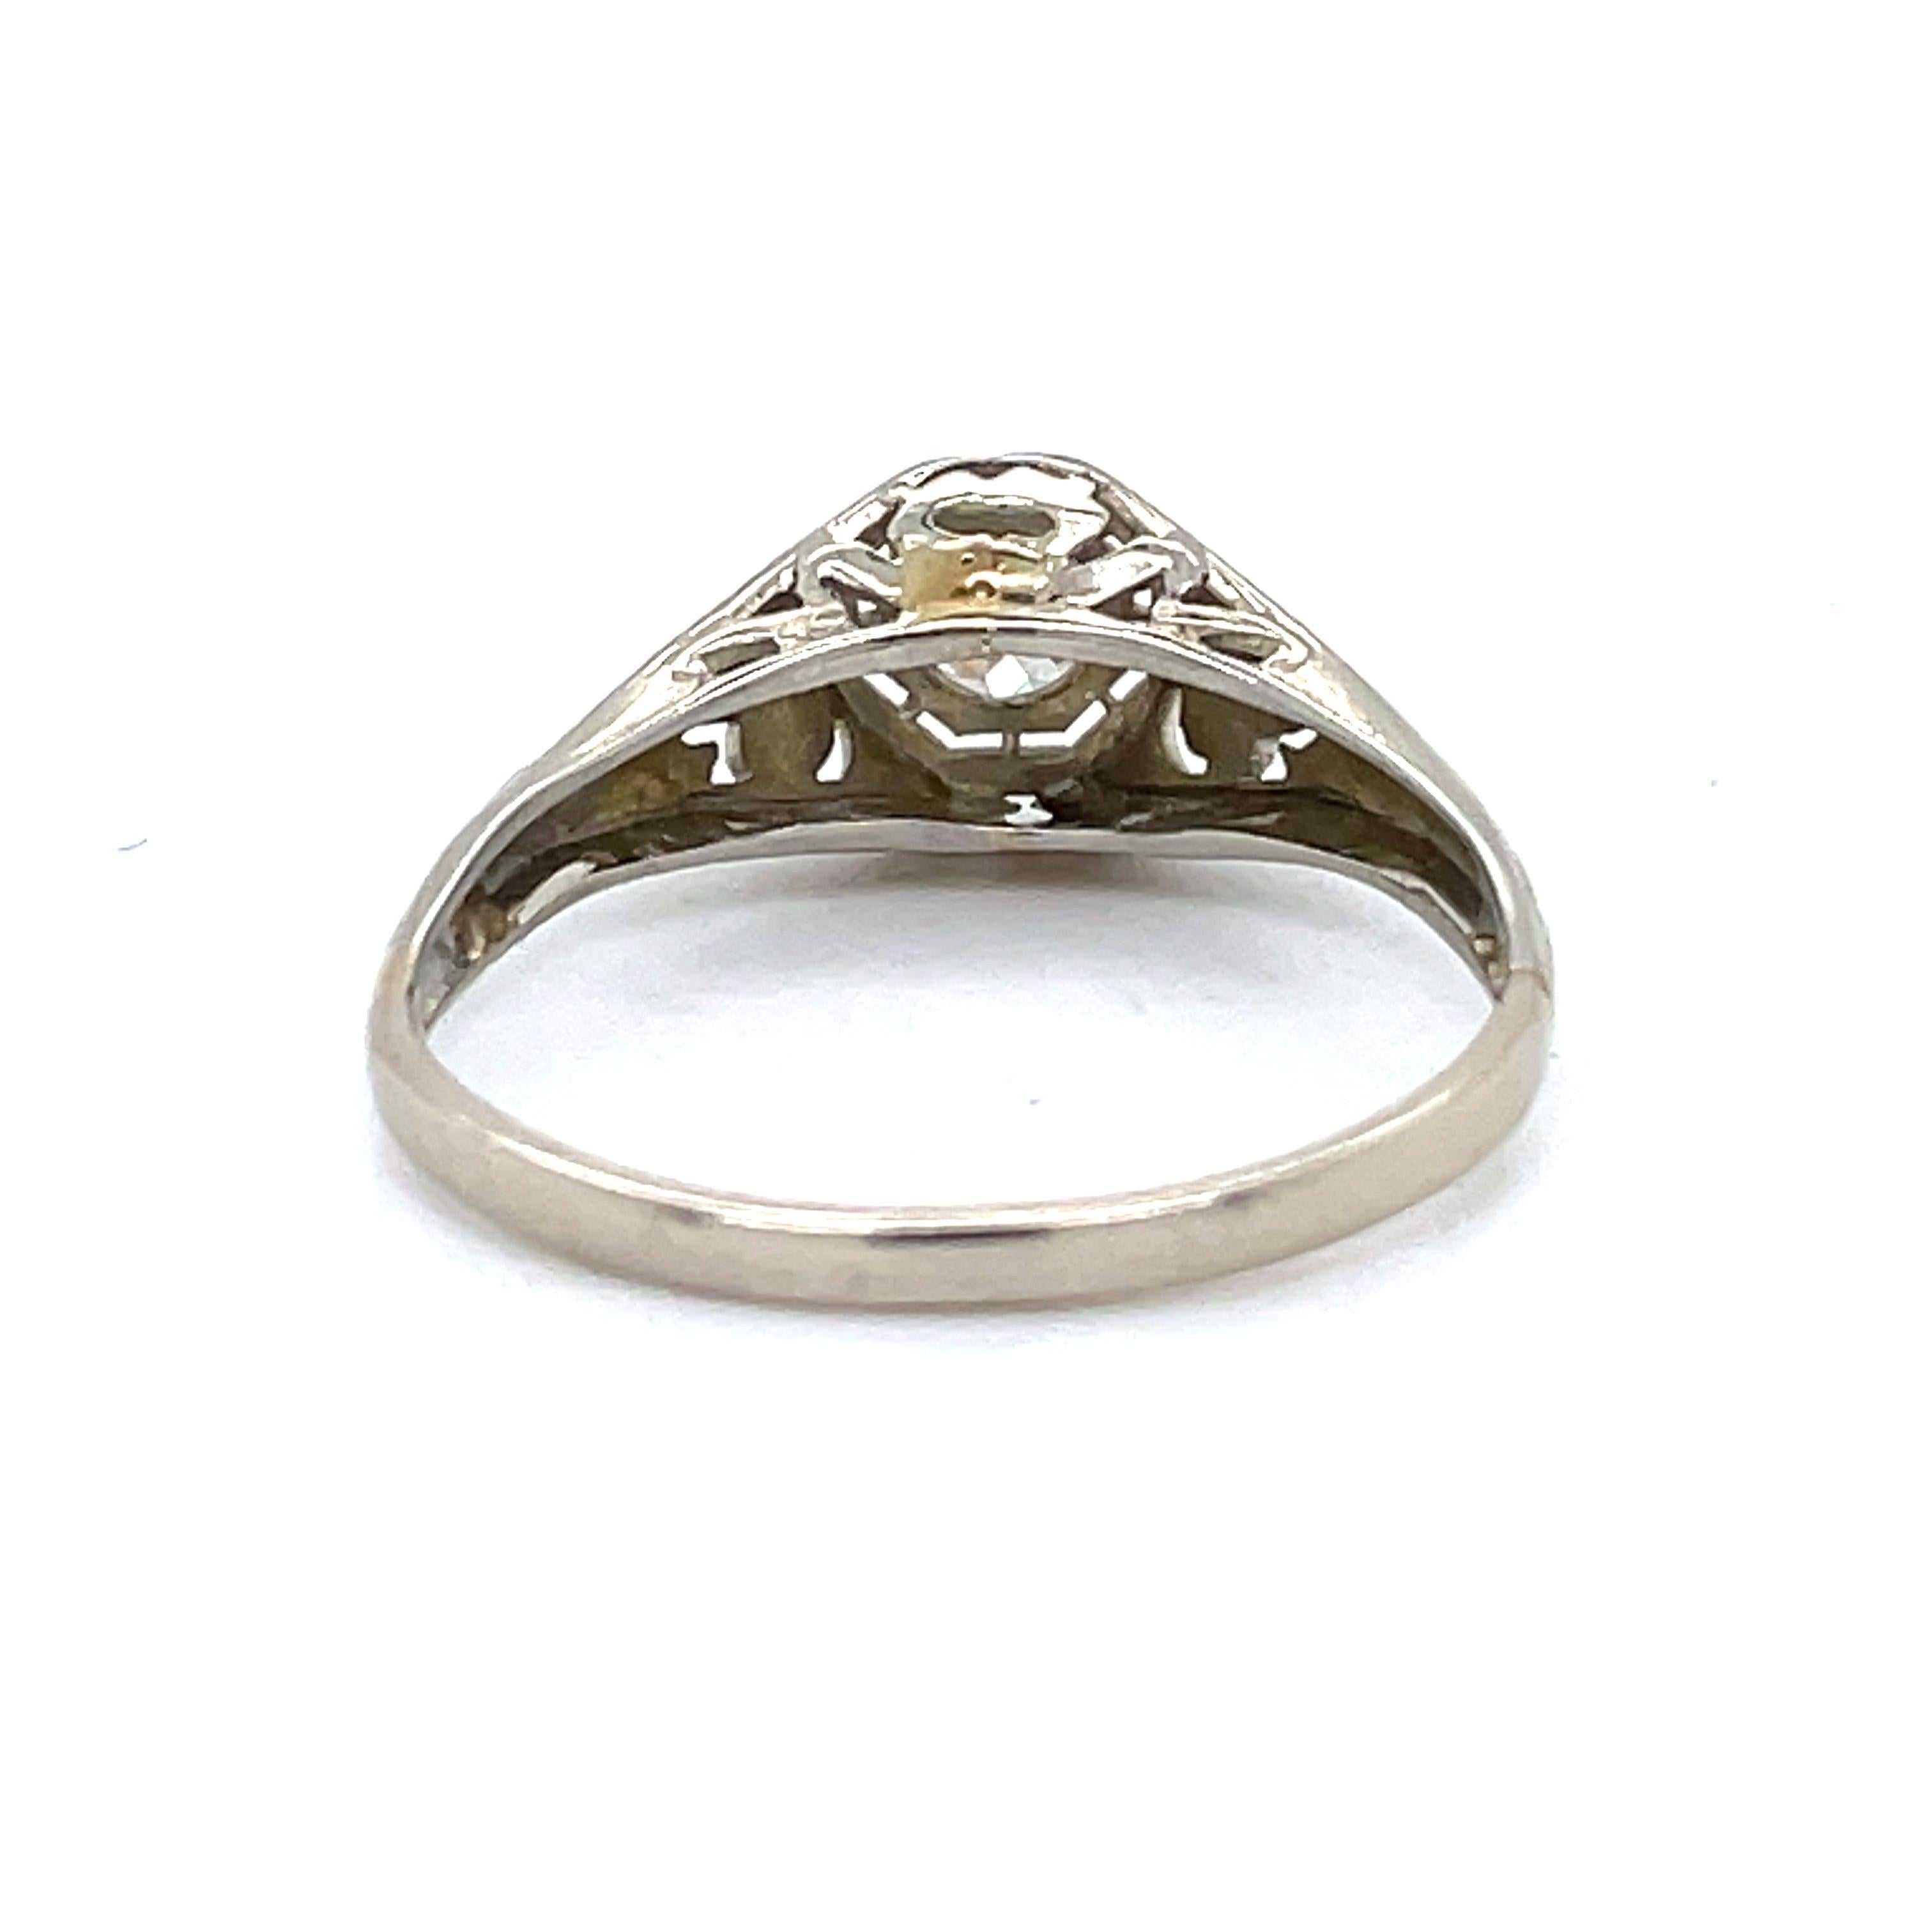 Art Deco Dome Filigree Ring - 18K White gold dome ring, 0.15ct old European cut diamond For Sale